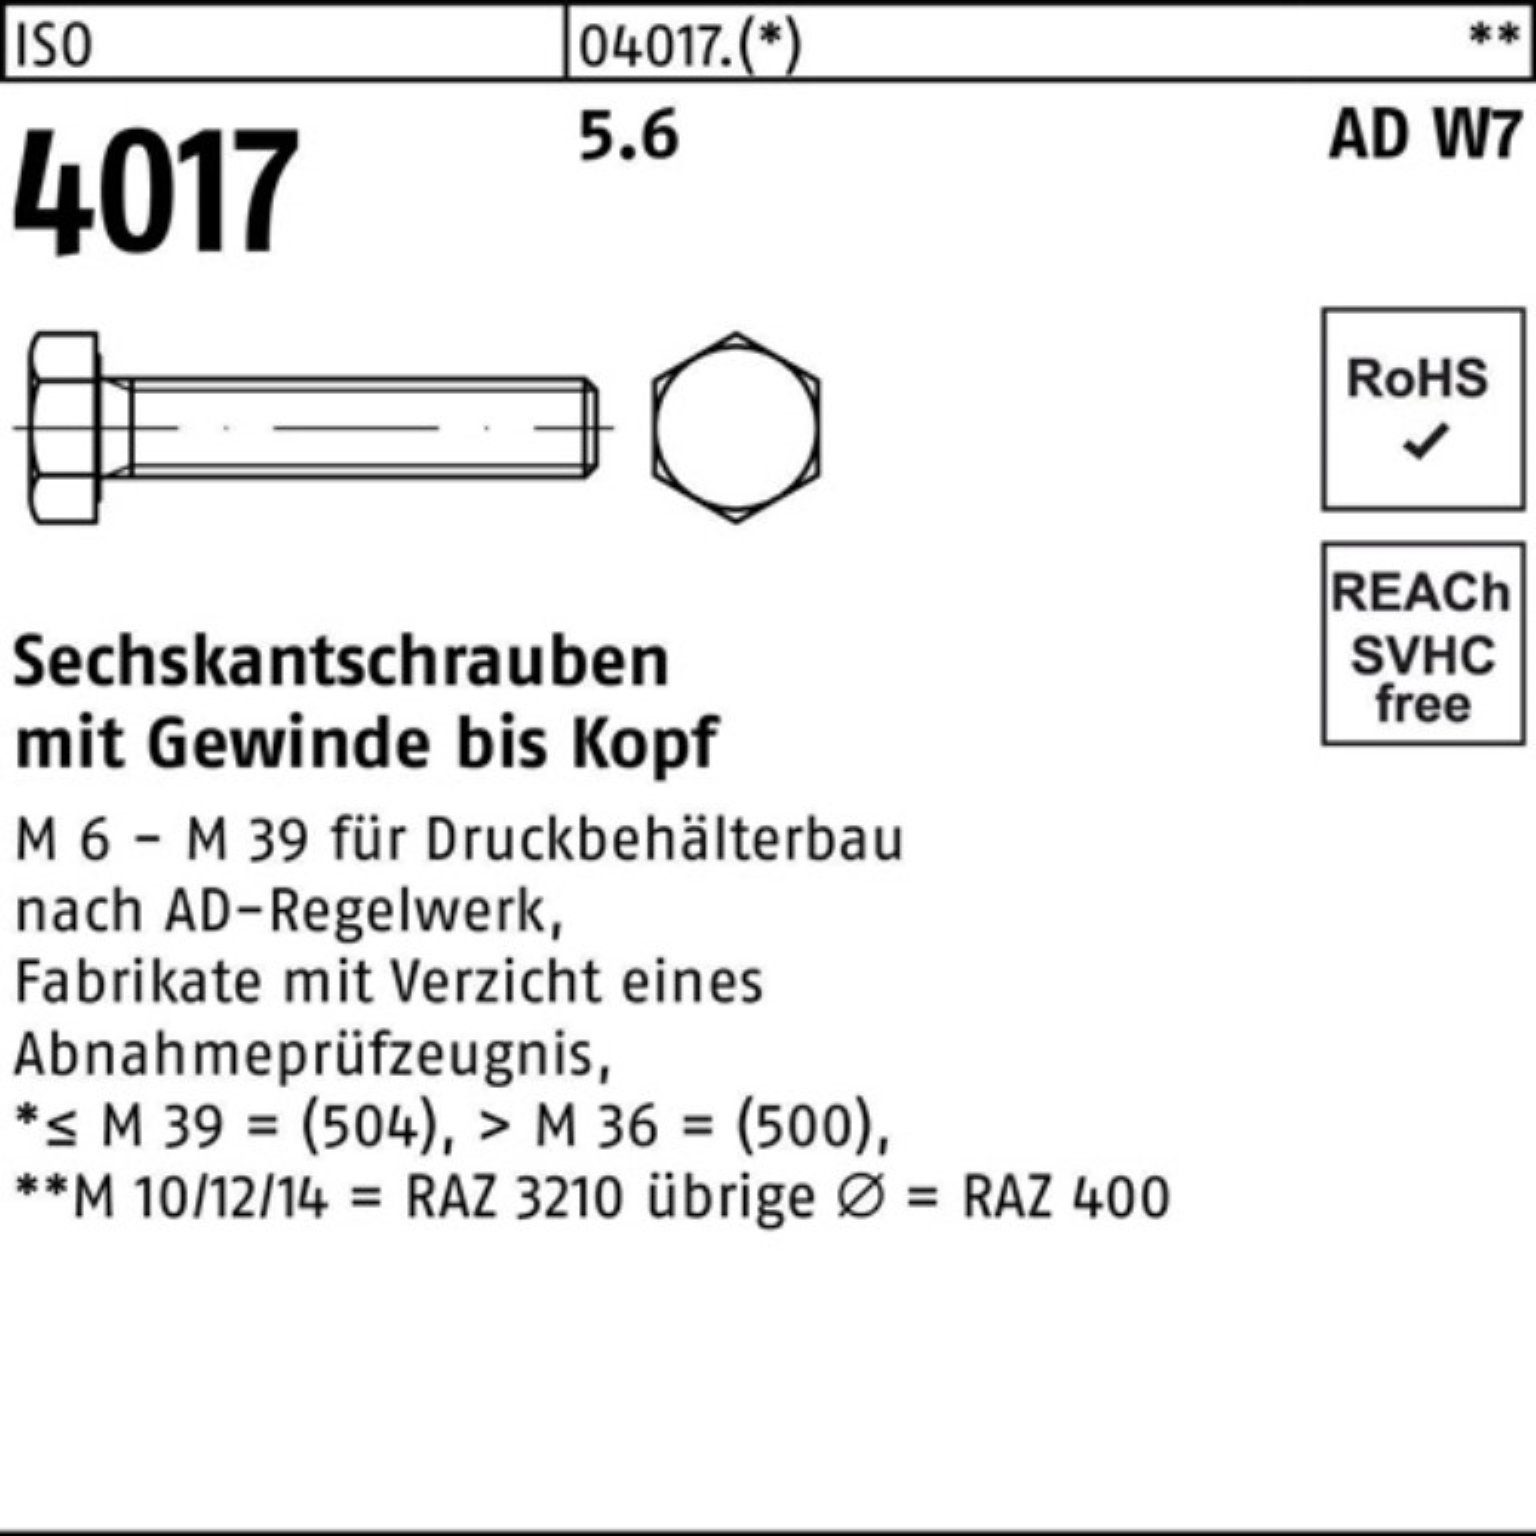 erste Klasse Bufab Sechskantschraube 100er W7 ISO 5.6 Stück IS Sechskantschraube VG M30x 1 AD 4017 60 Pack